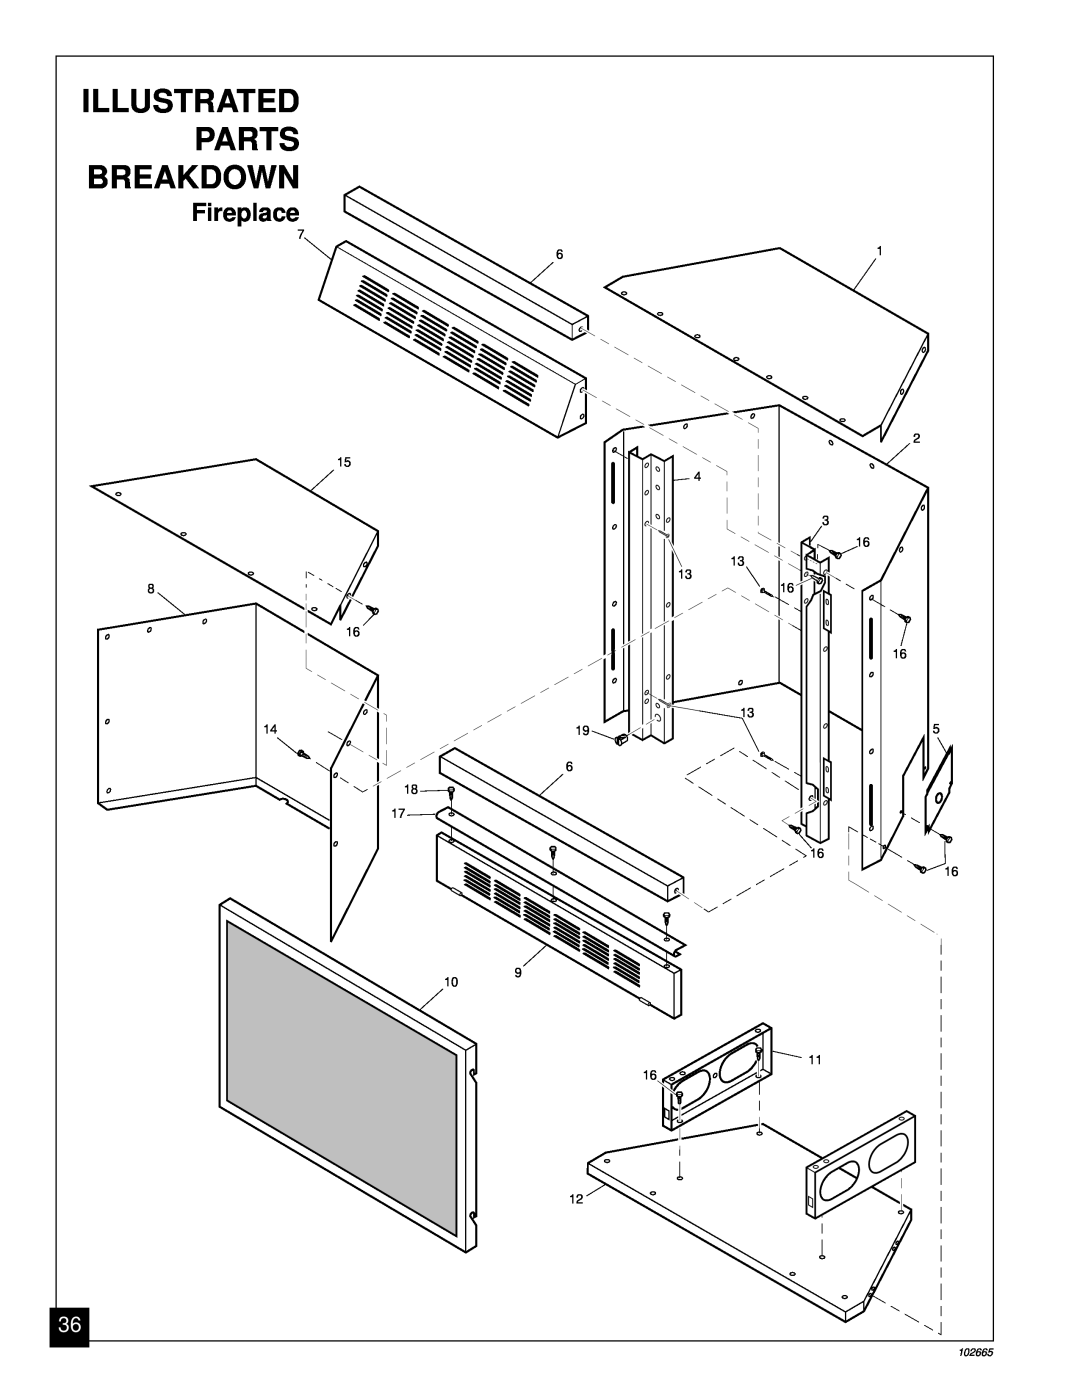 Desa CGF280PT, CGF265PVA installation manual Fireplace, Illustrated, Parts, Breakdown, 102665 